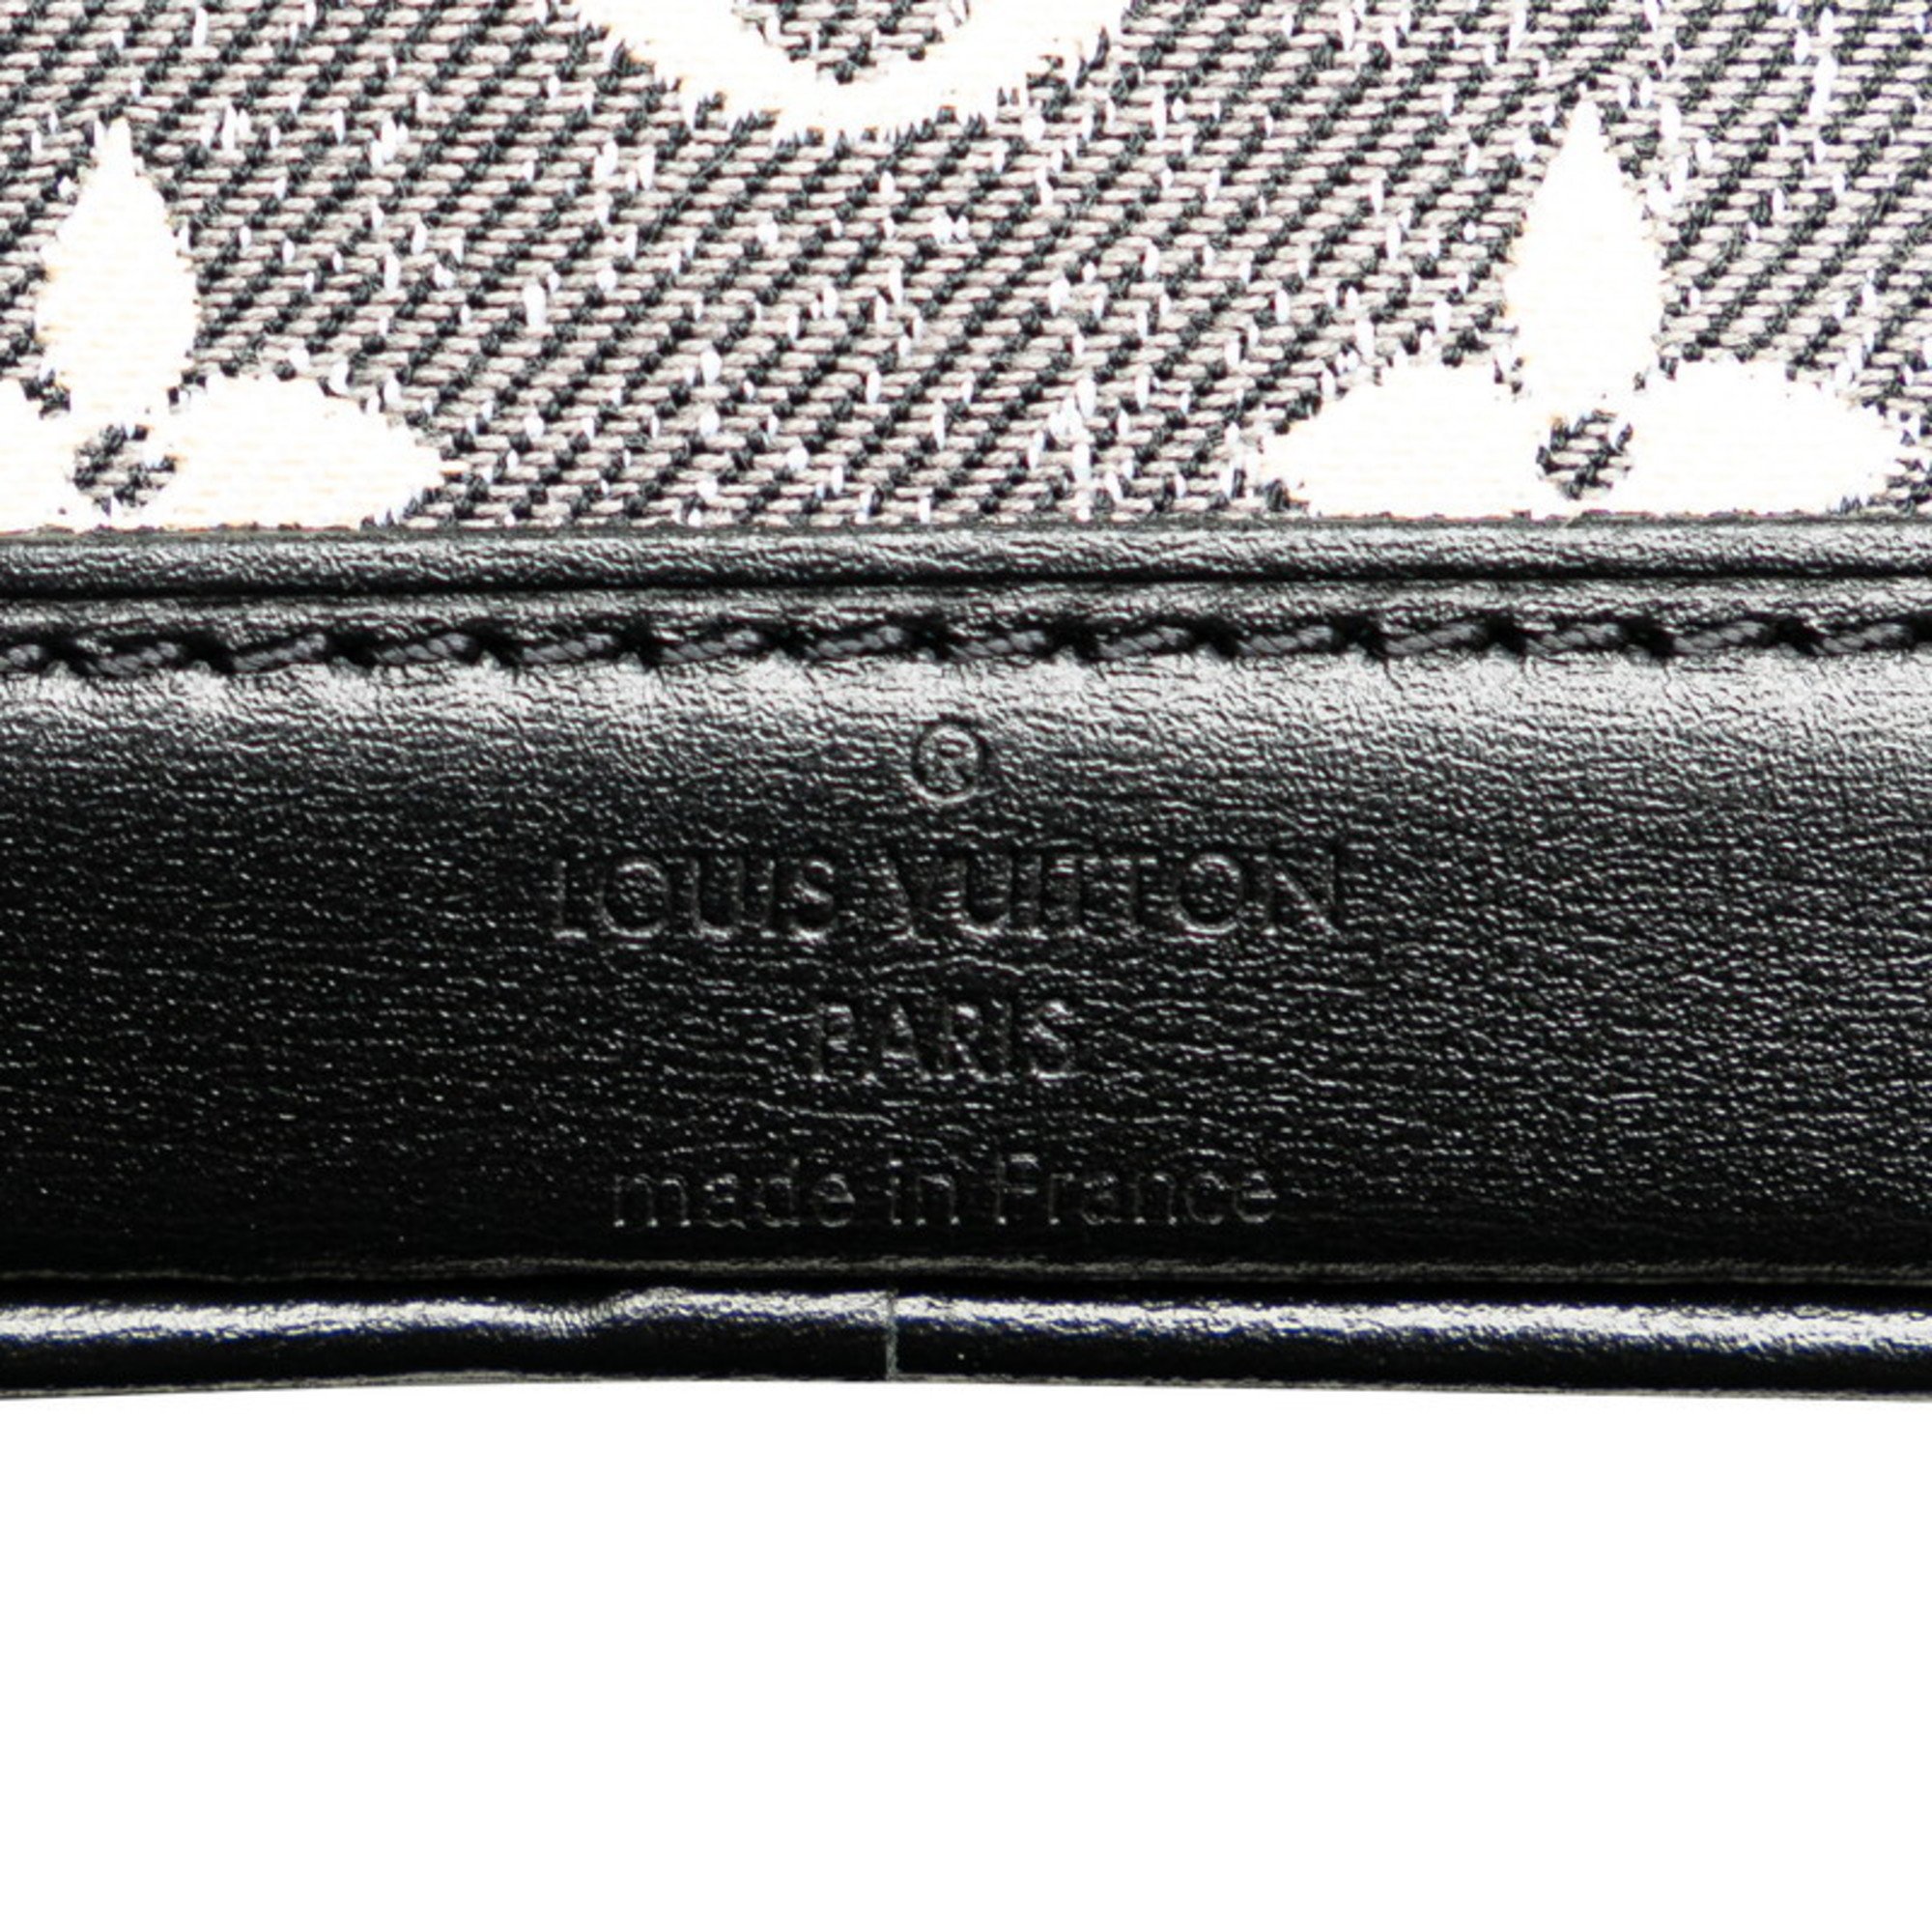 Louis Vuitton Monogram Jacquard Nano Noe Handbag Shoulder Bag M46449 Gray Black Denim Leather Women's LOUIS VUITTON